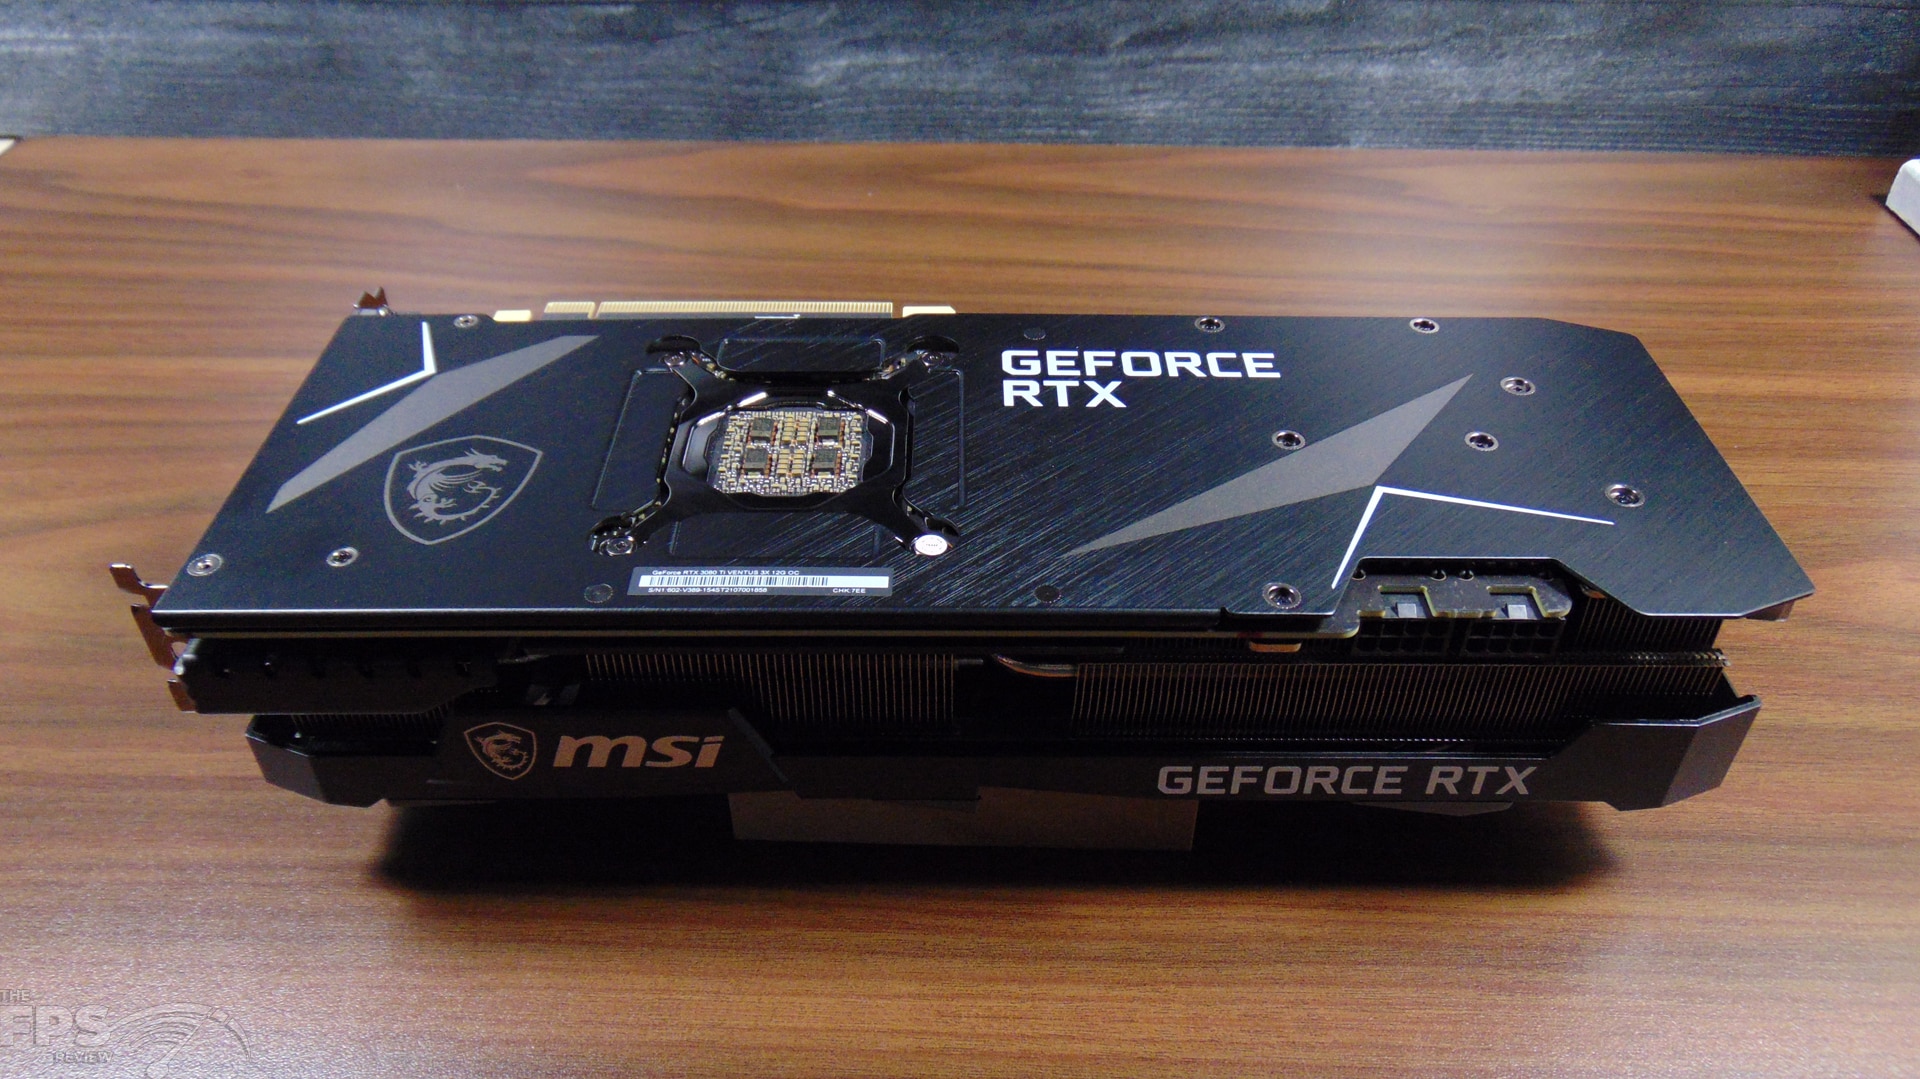 MSI Ventus GeForce RTX 3080 Video Card RTX 3080 VENTUS 3X PLUS 10G OC LHR 